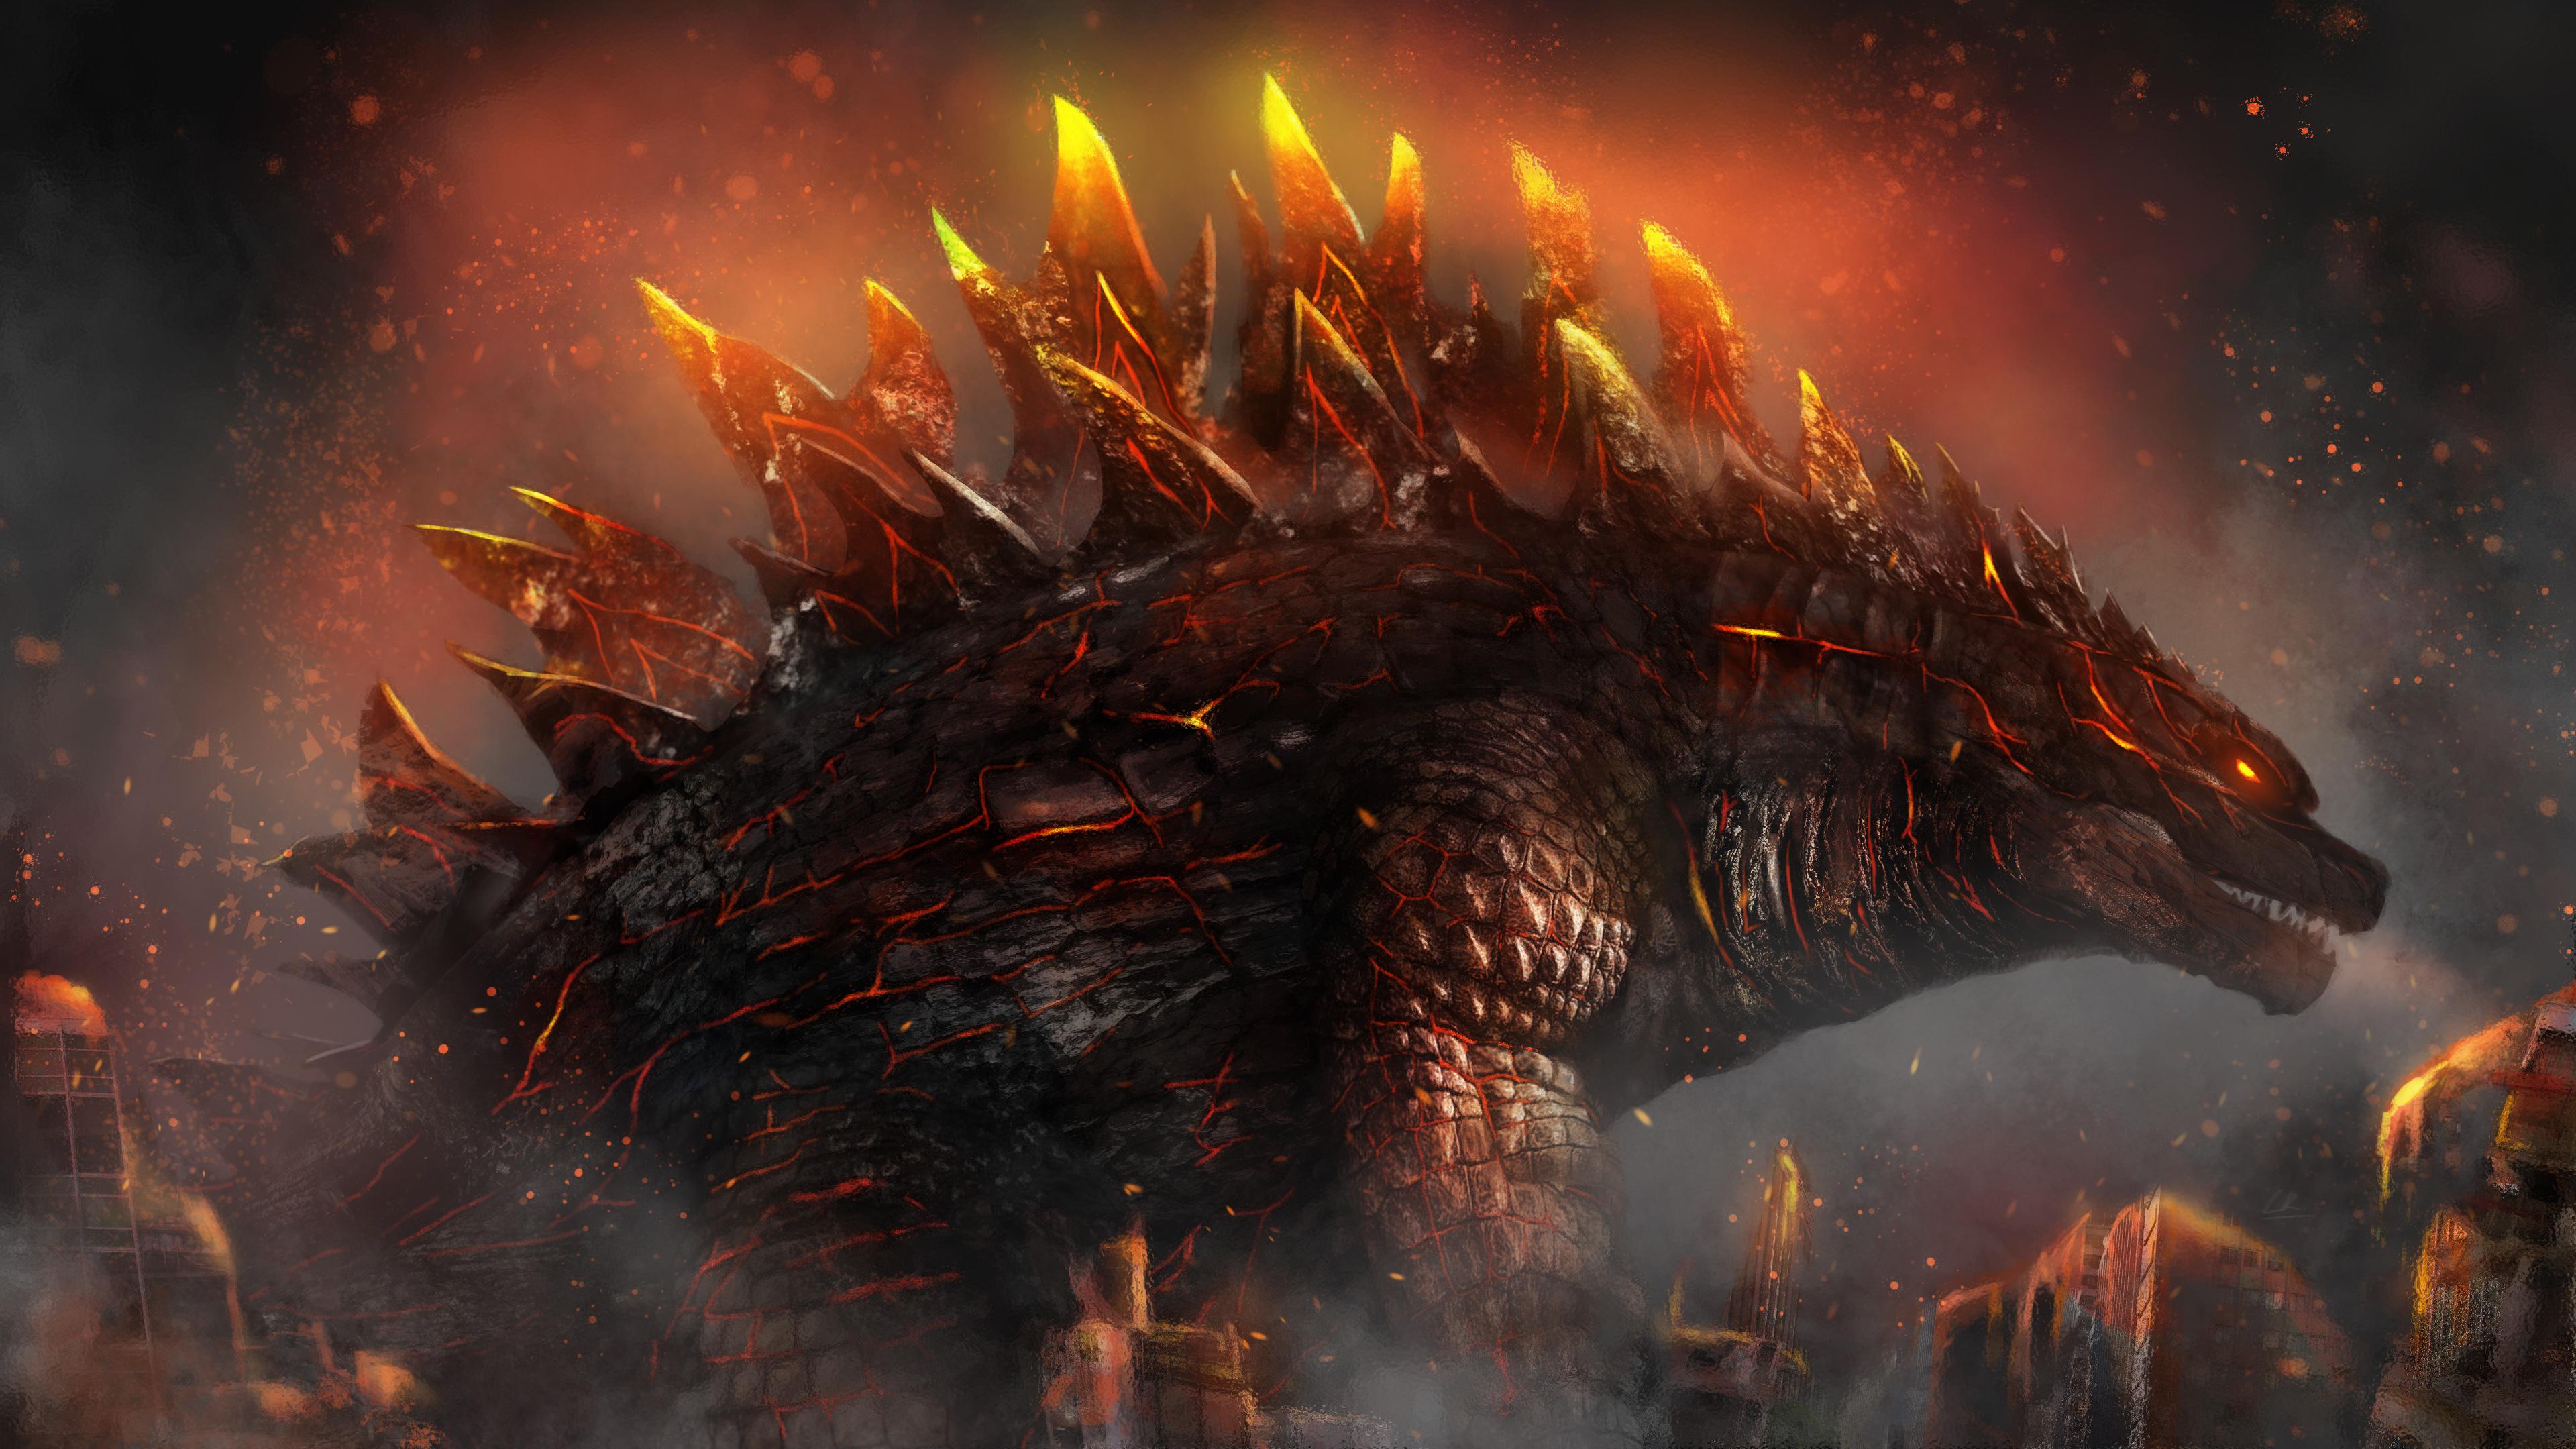 Godzilla 4K wallpaper for your desktop or mobile screen free